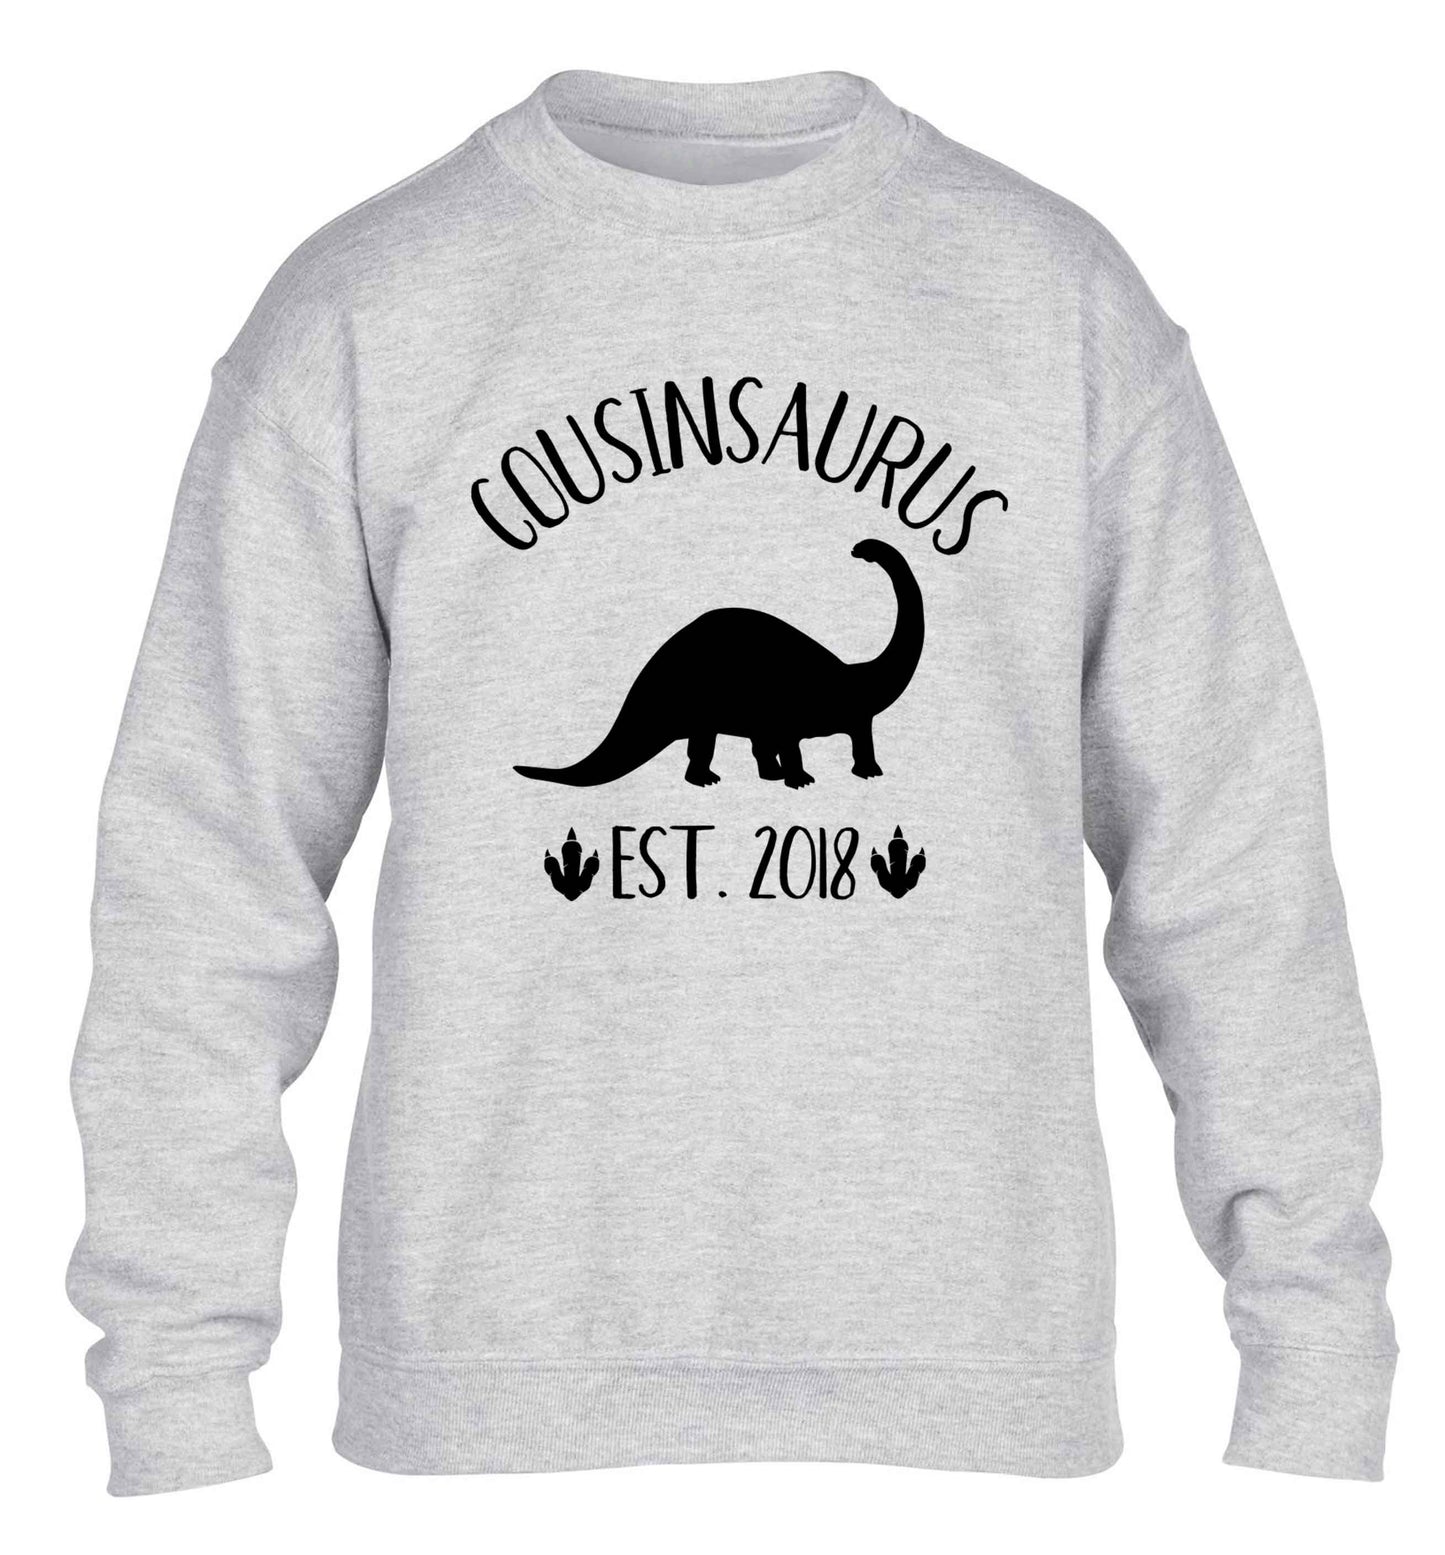 Personalised cousinsaurus since (custom date) children's grey sweater 12-13 Years